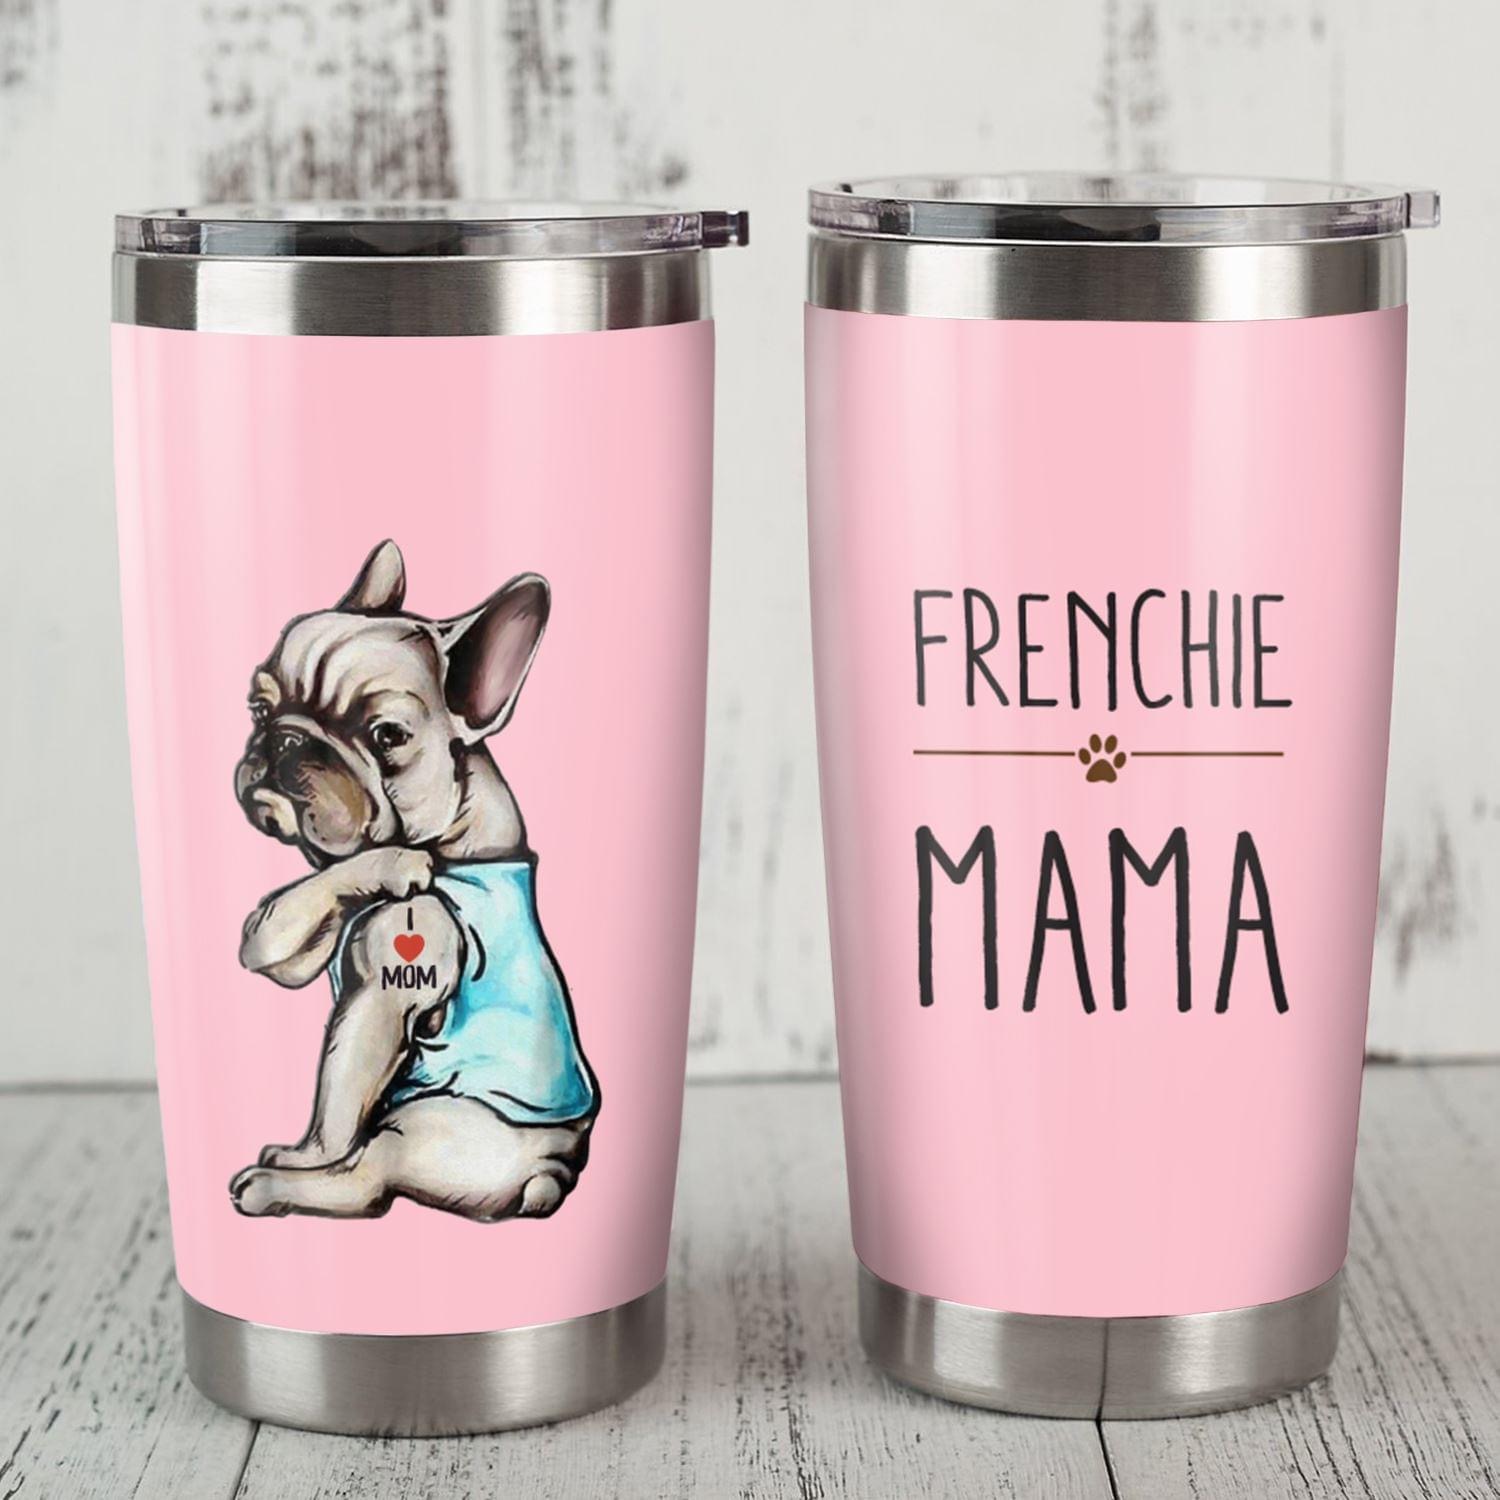 dachshund stainless steel tumbler familynine - Frenche Mom